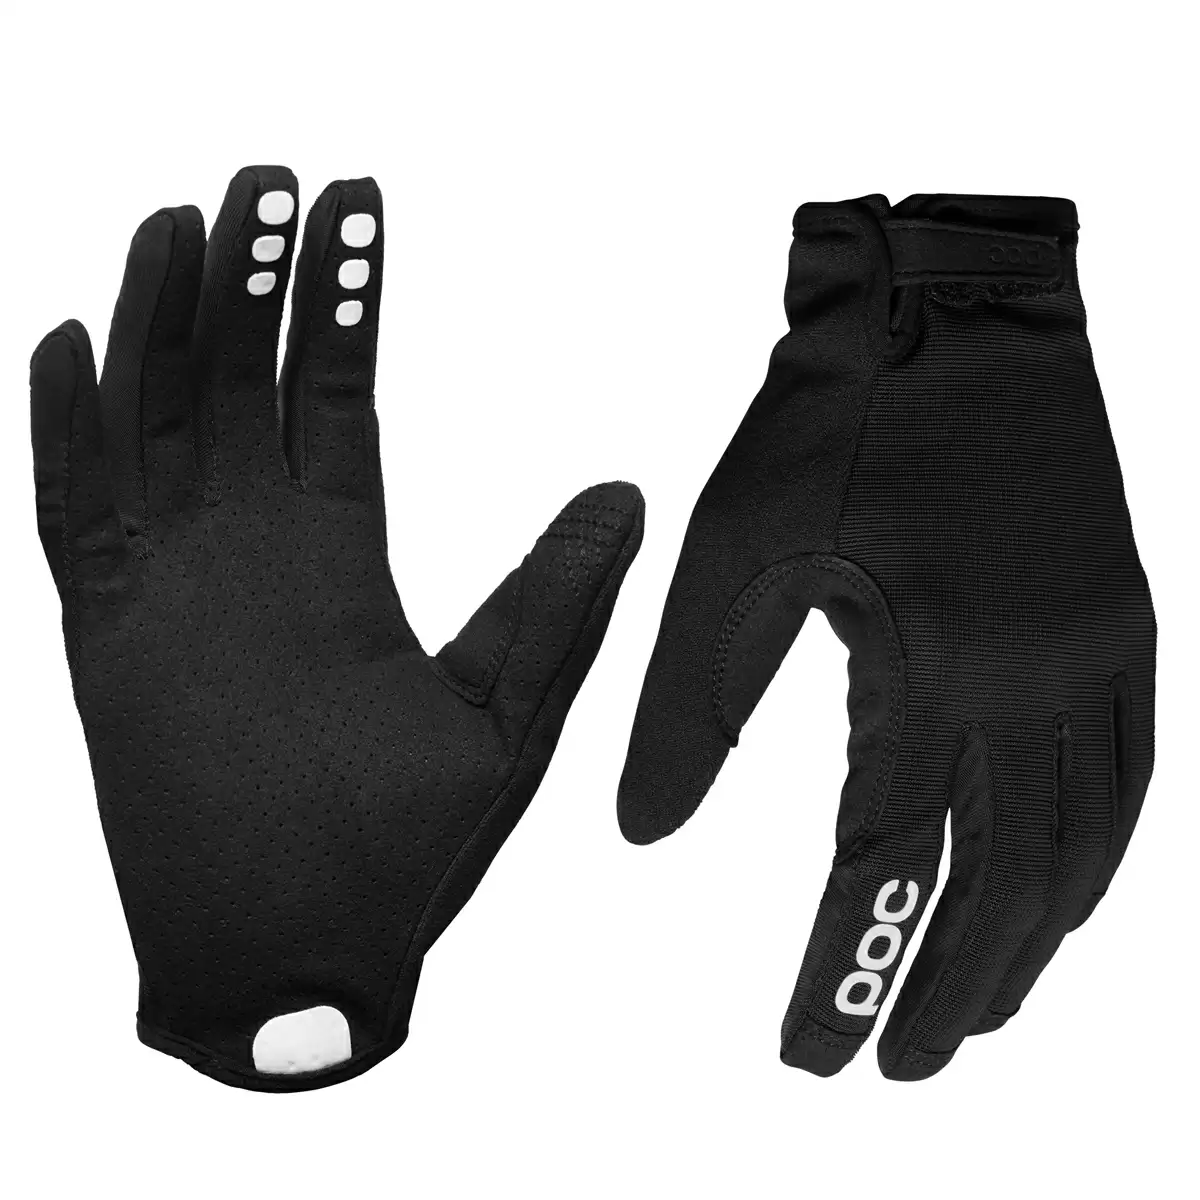 Resistance Enduro Adj Glove Black Size L - image